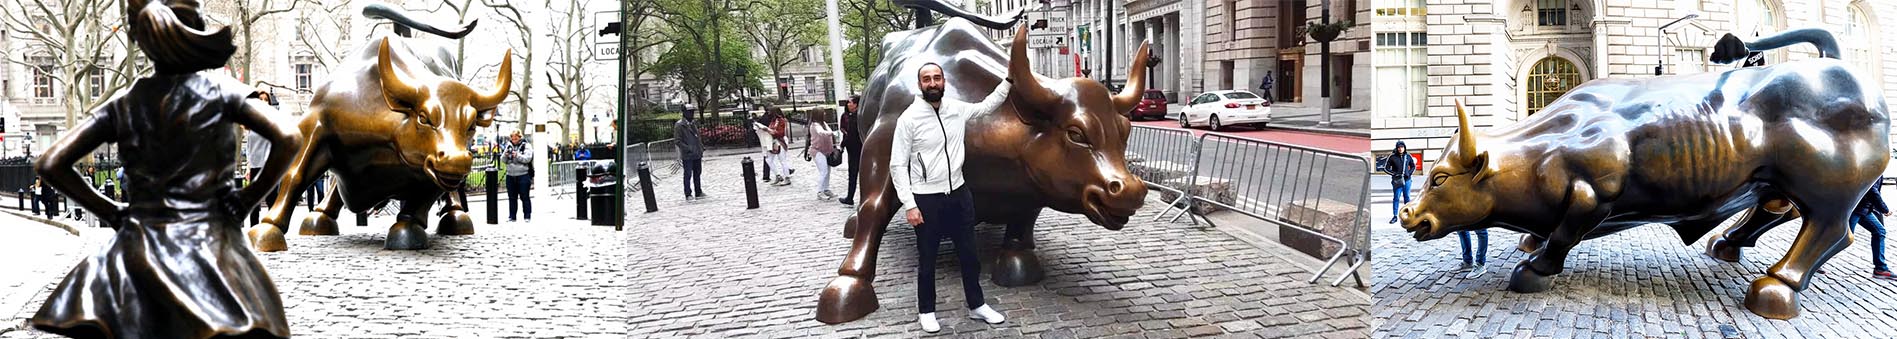 YouFine Life Size Bronze Bull Statue